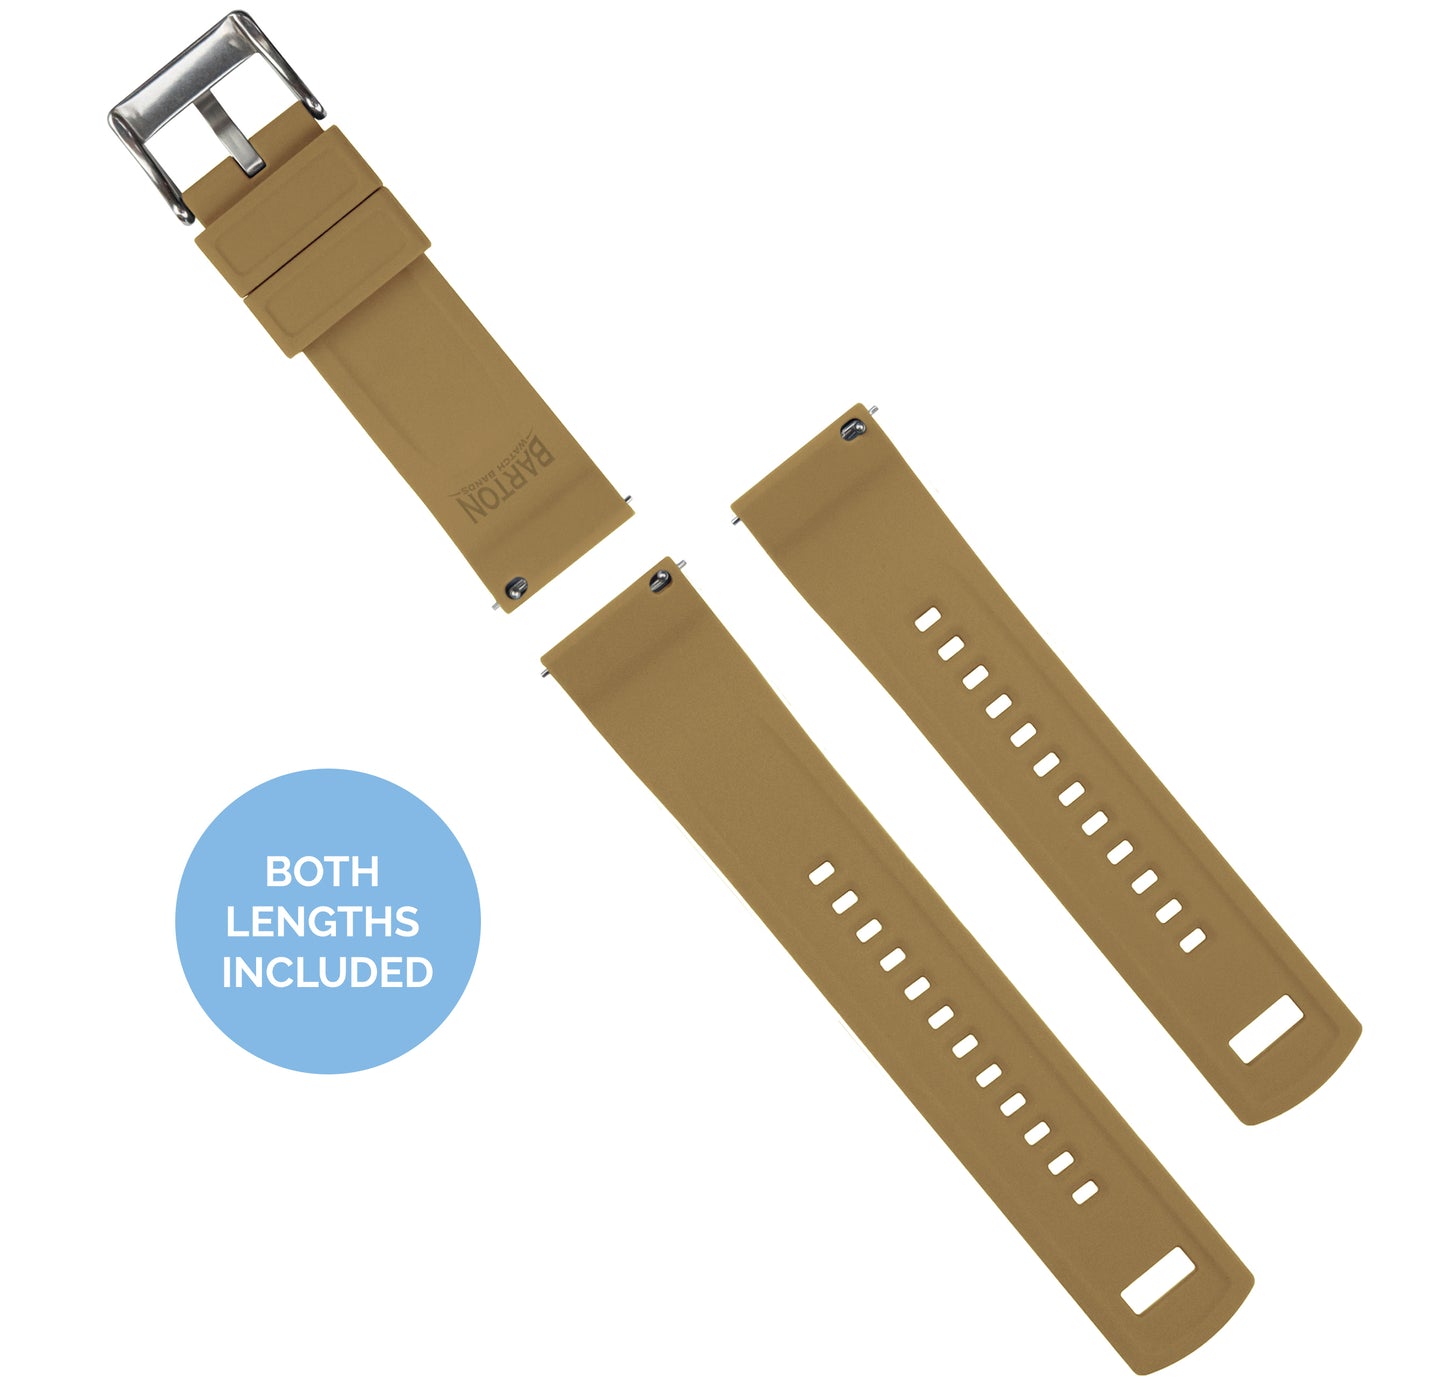 Samsung Galaxy Watch3 | Elite Silicone | Brown Top / Khaki Bottom - Barton Watch Bands